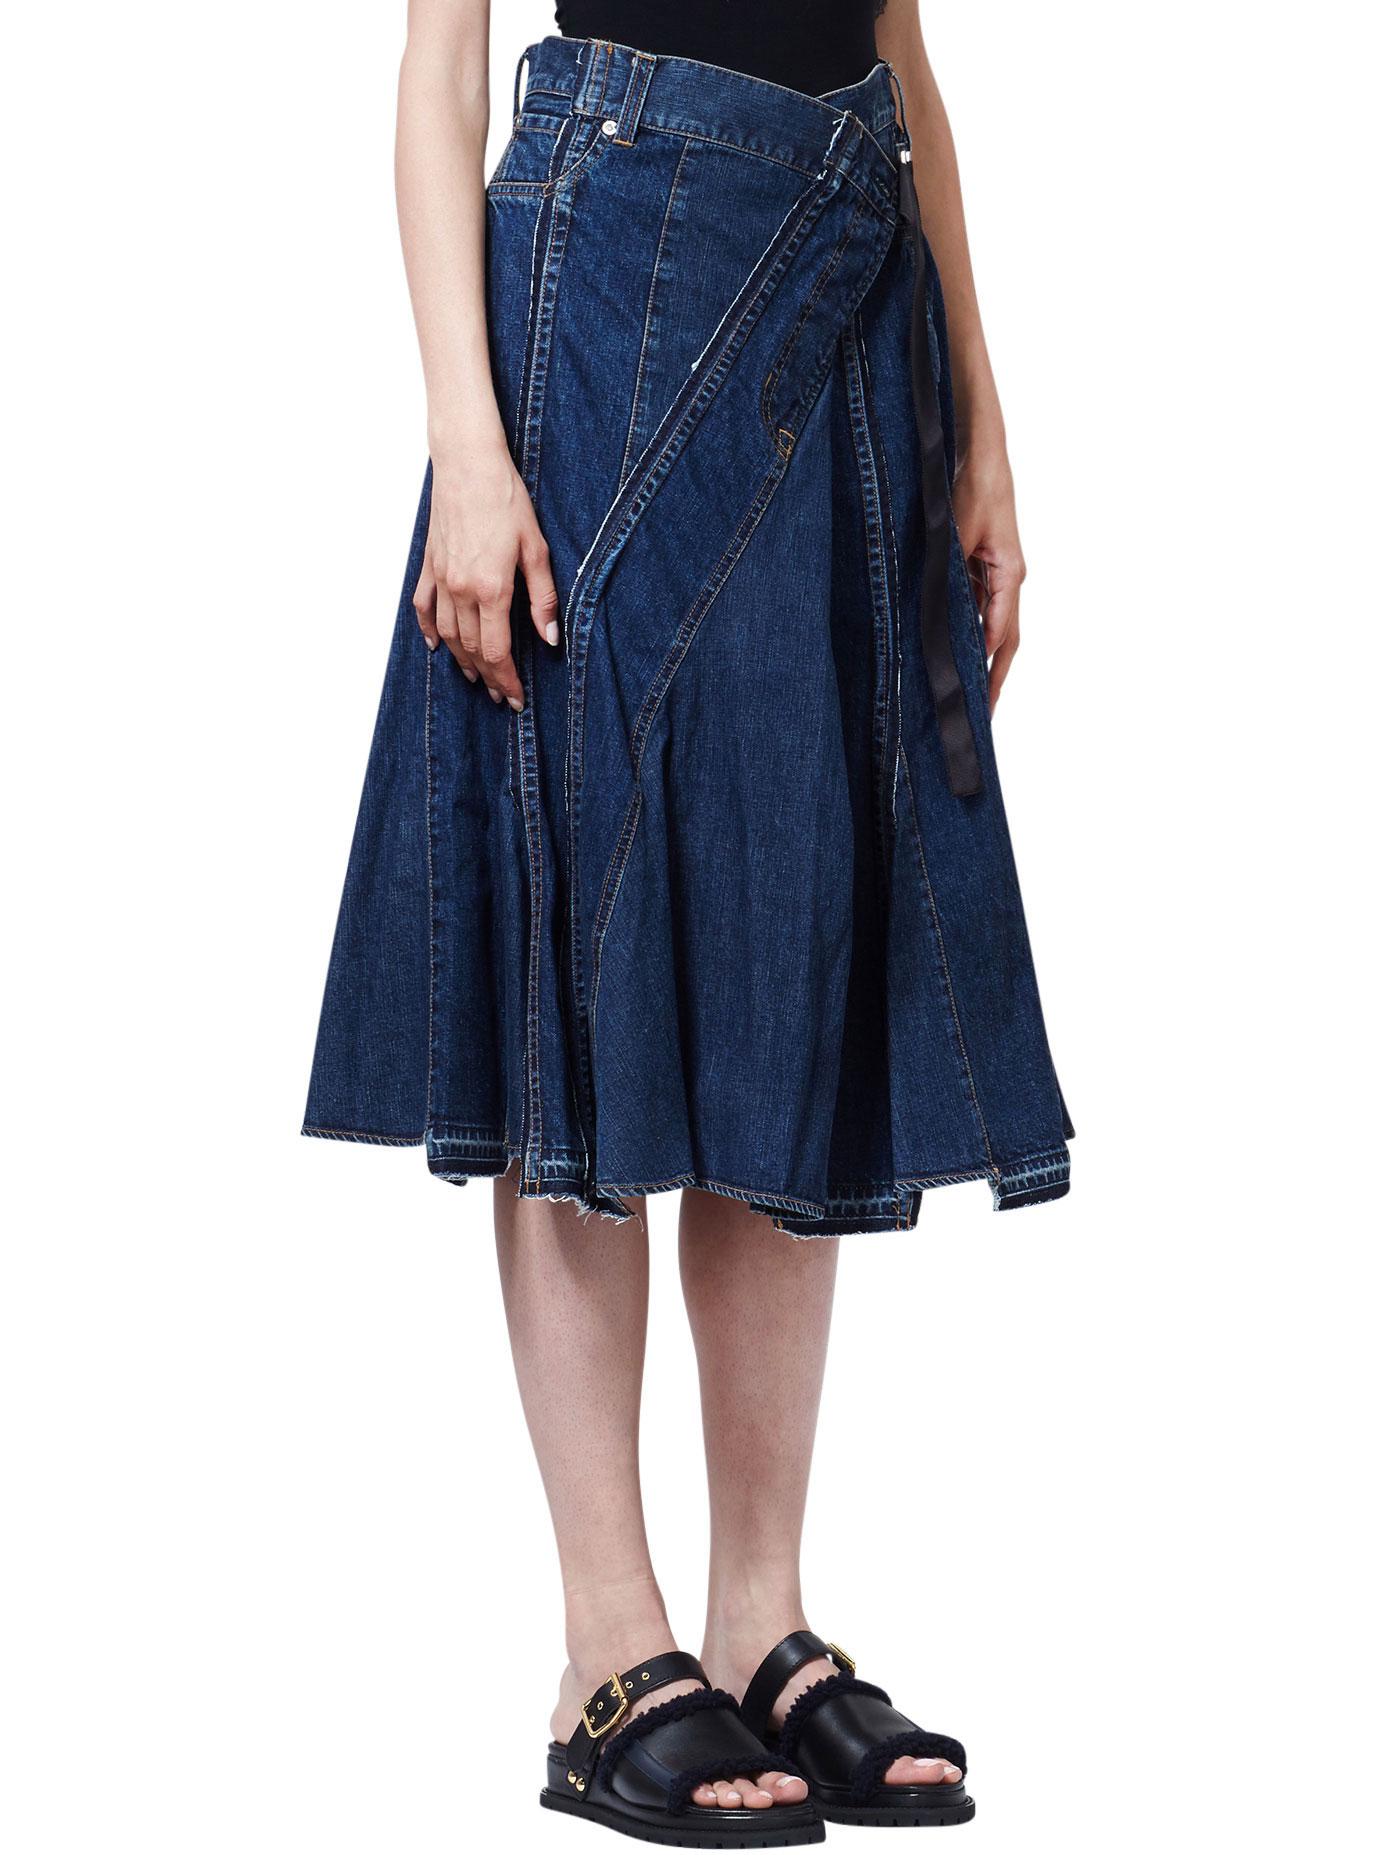 Sacai Asymmetrical Denim Skirt in Blue - Lyst